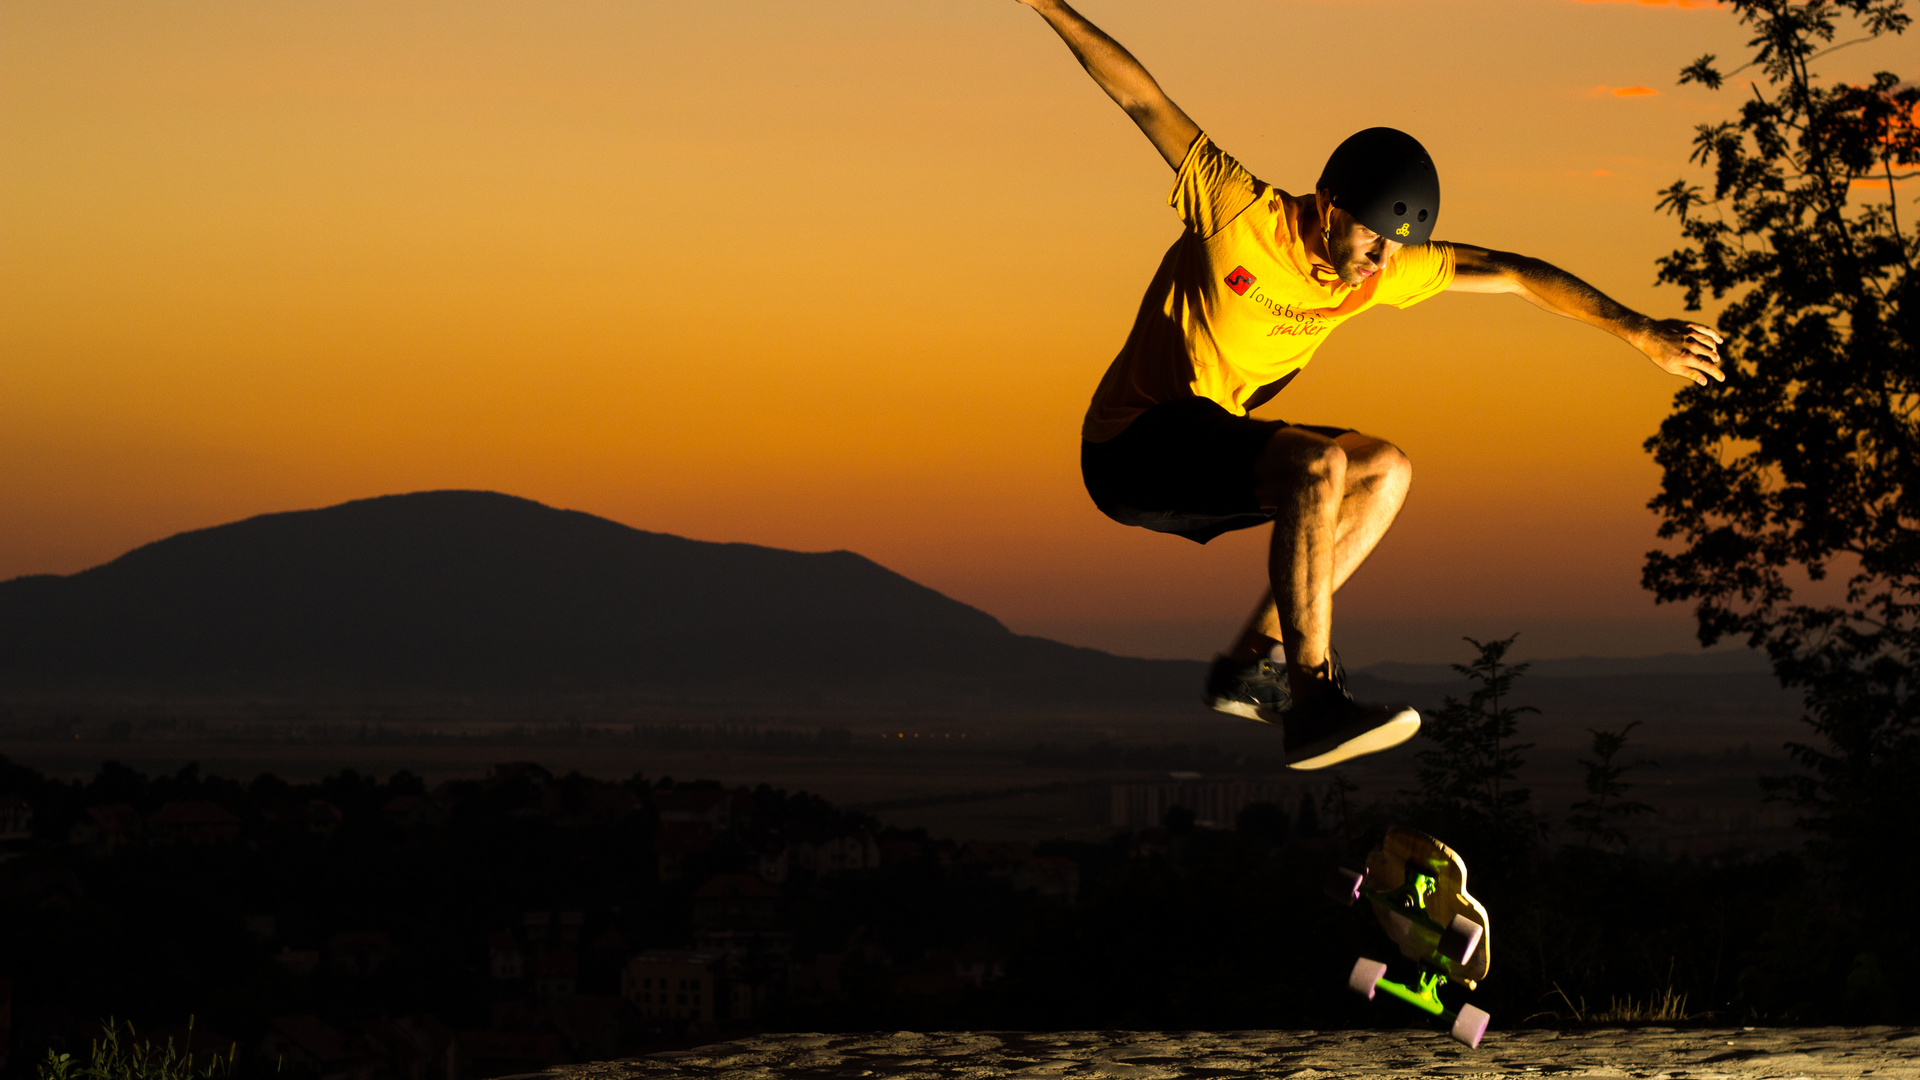 Awesome Skateboard Wallpaper Photos